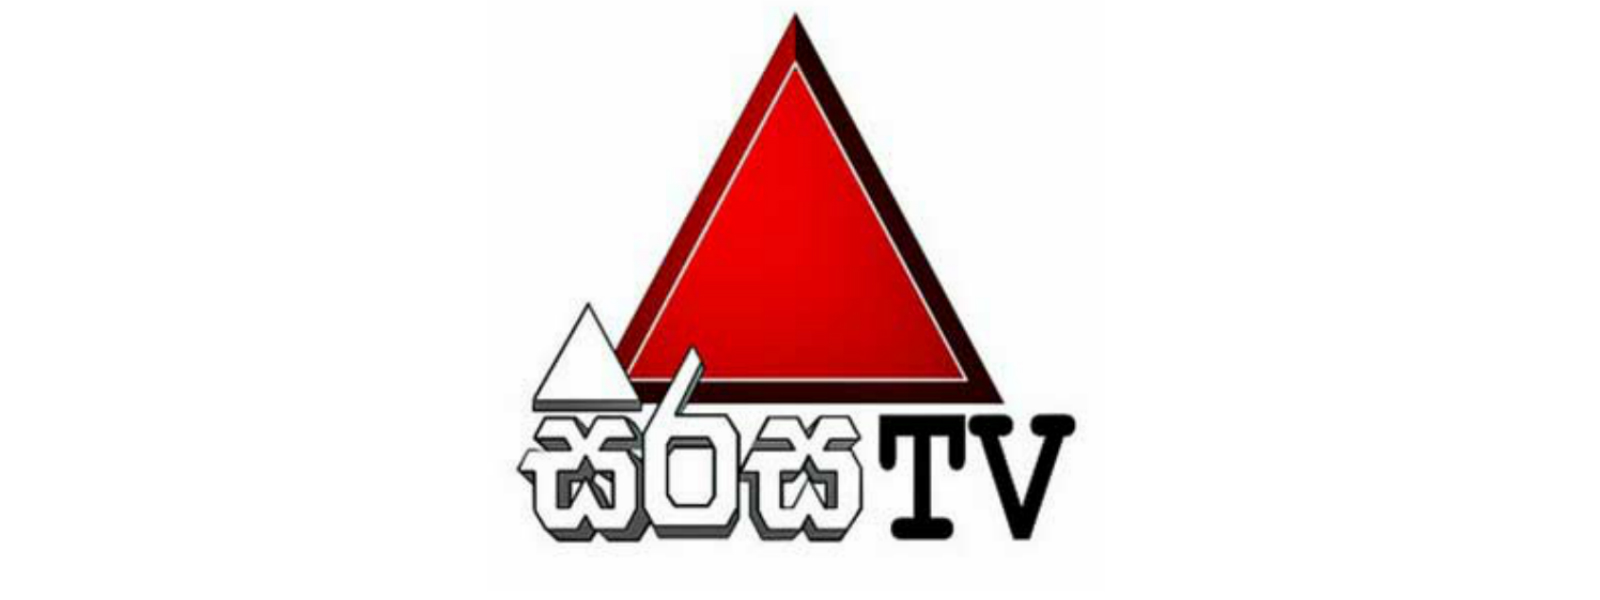 Sirasa TV to celebrate its 20th anniversary